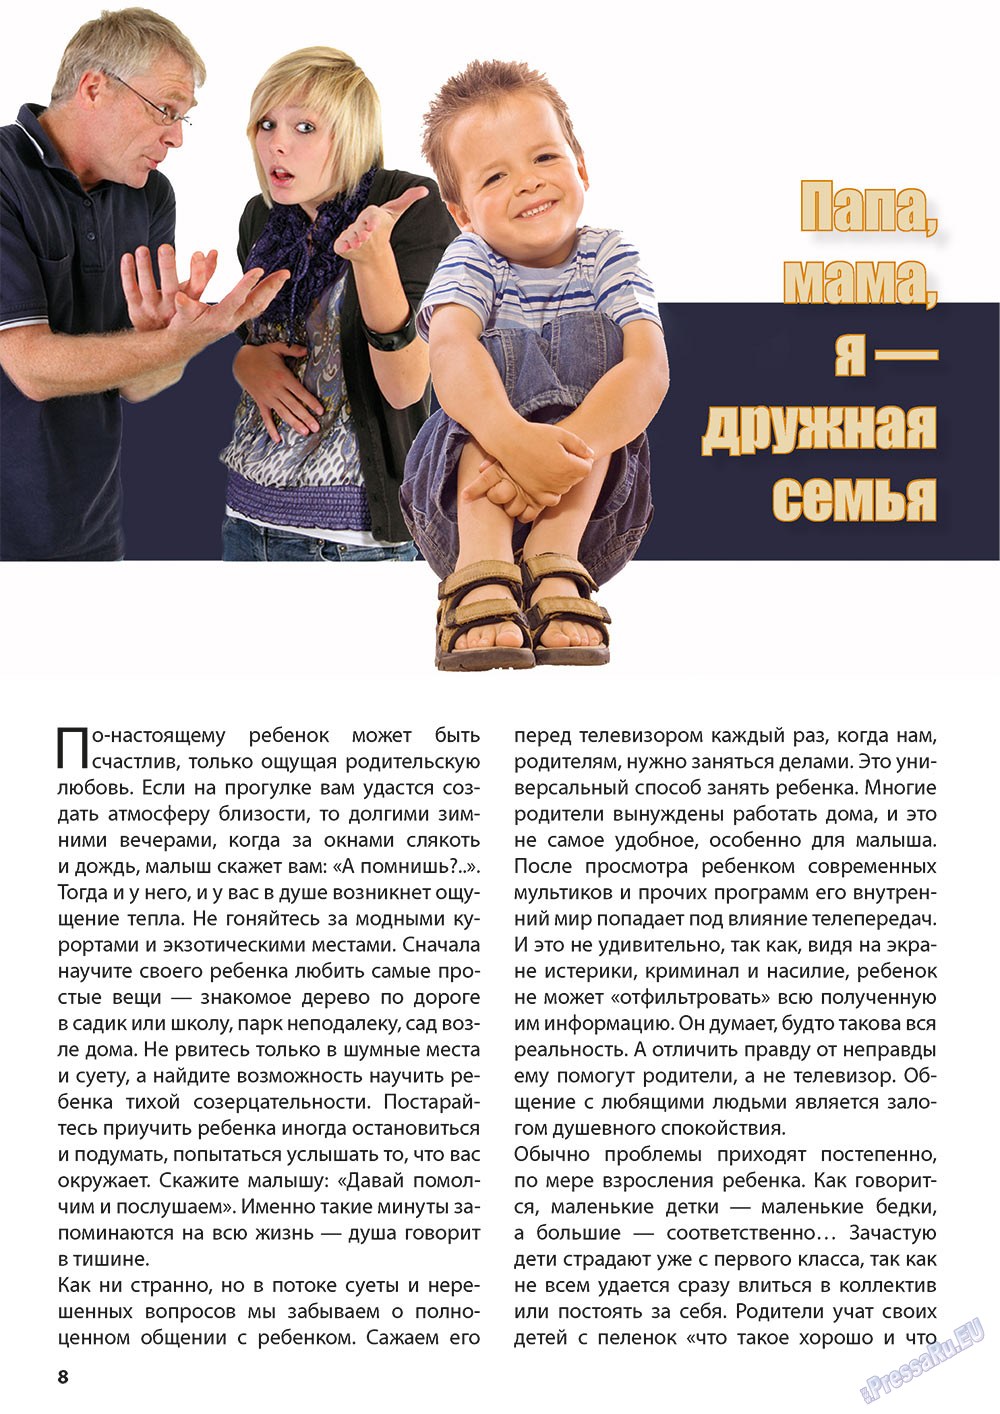 Wadim, журнал. 2012 №10 стр.8